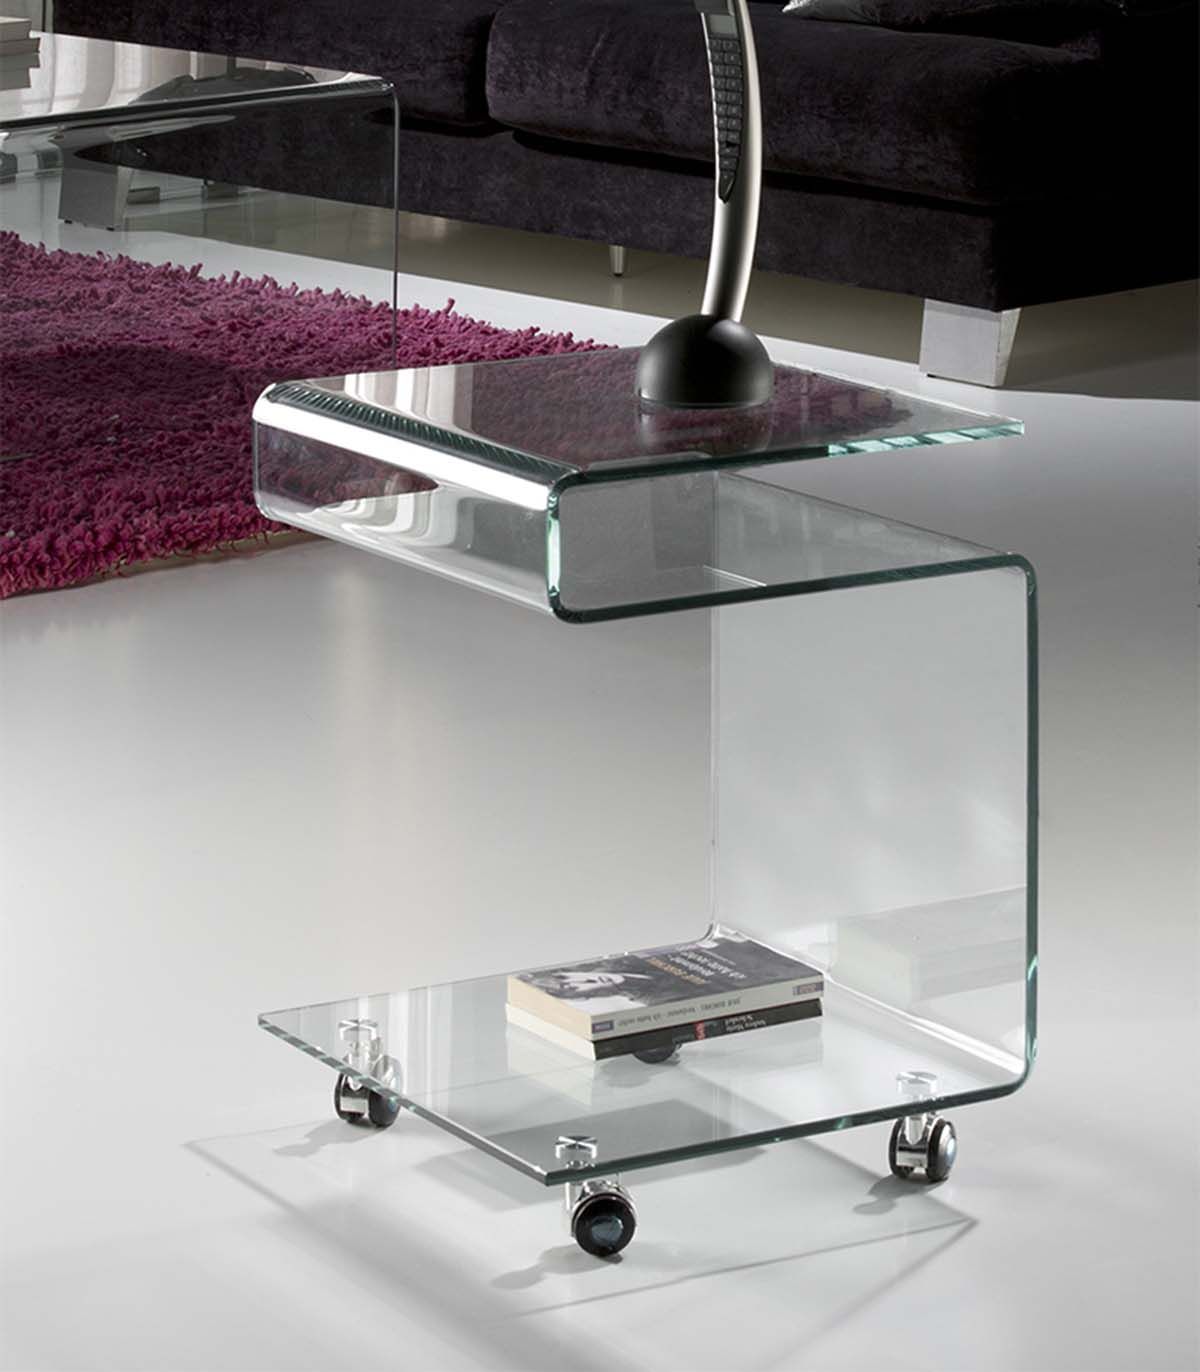 Mesa de centro de cristal curvado transparente Amarina 100 cm